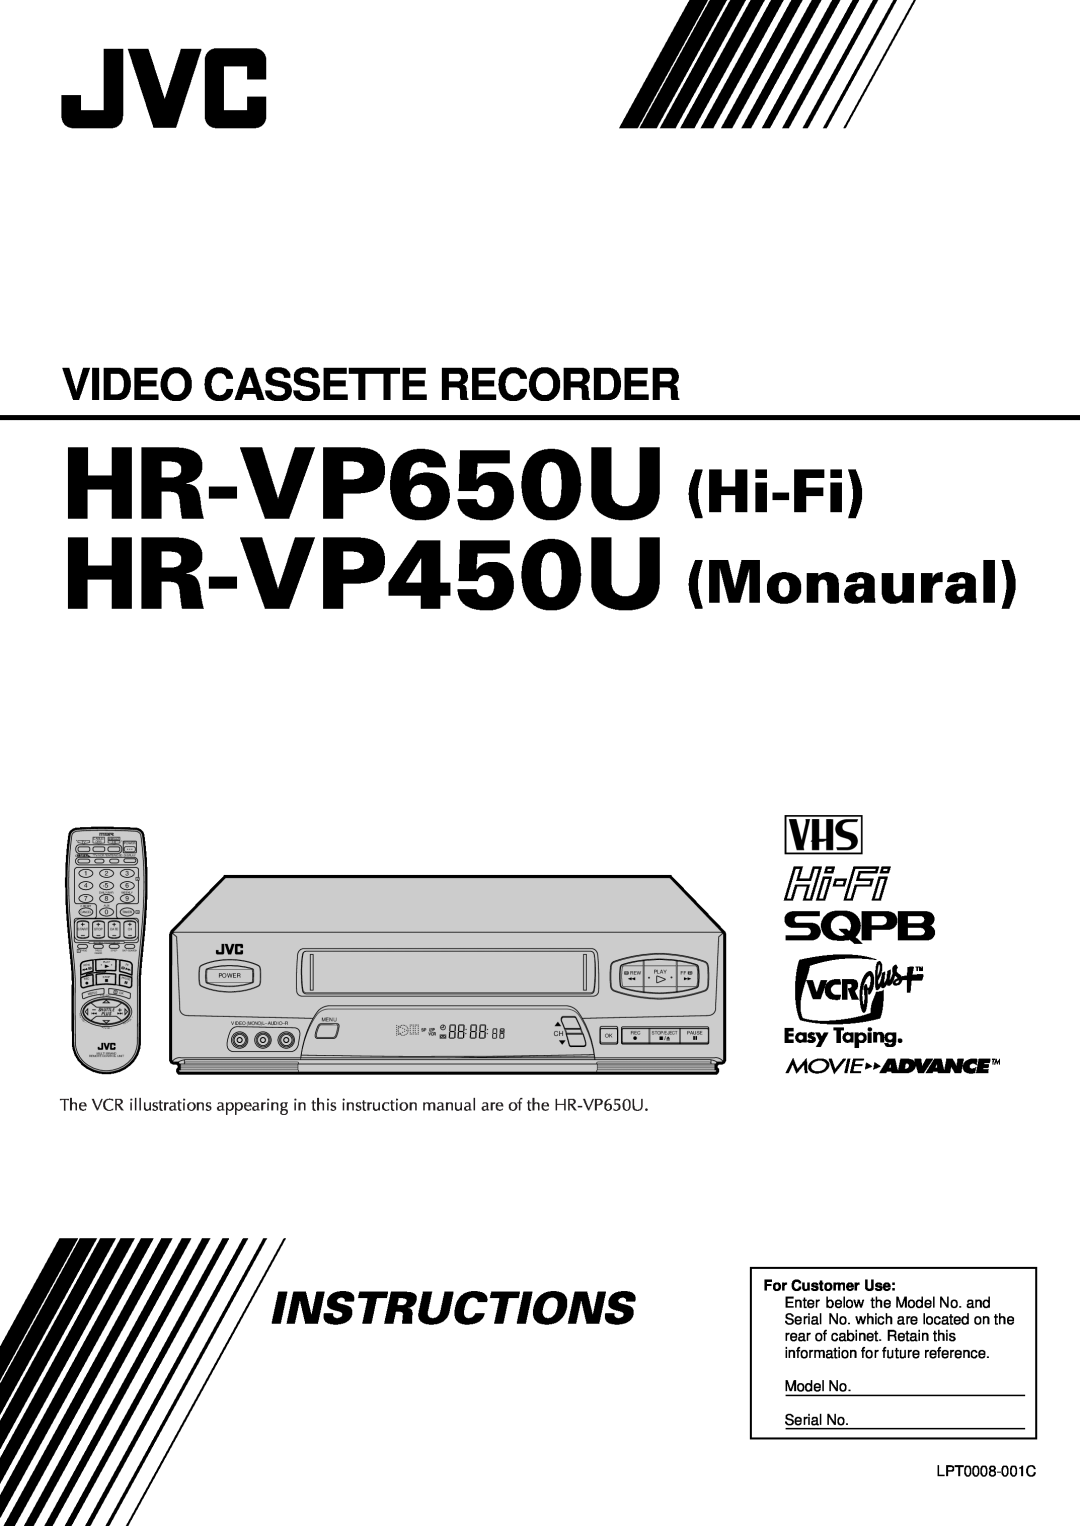 JVC instruction manual HR-VP650U HR-VP450U, Hi-Fi Monaural, Video Cassette Recorder, Instructions, For Customer Use 